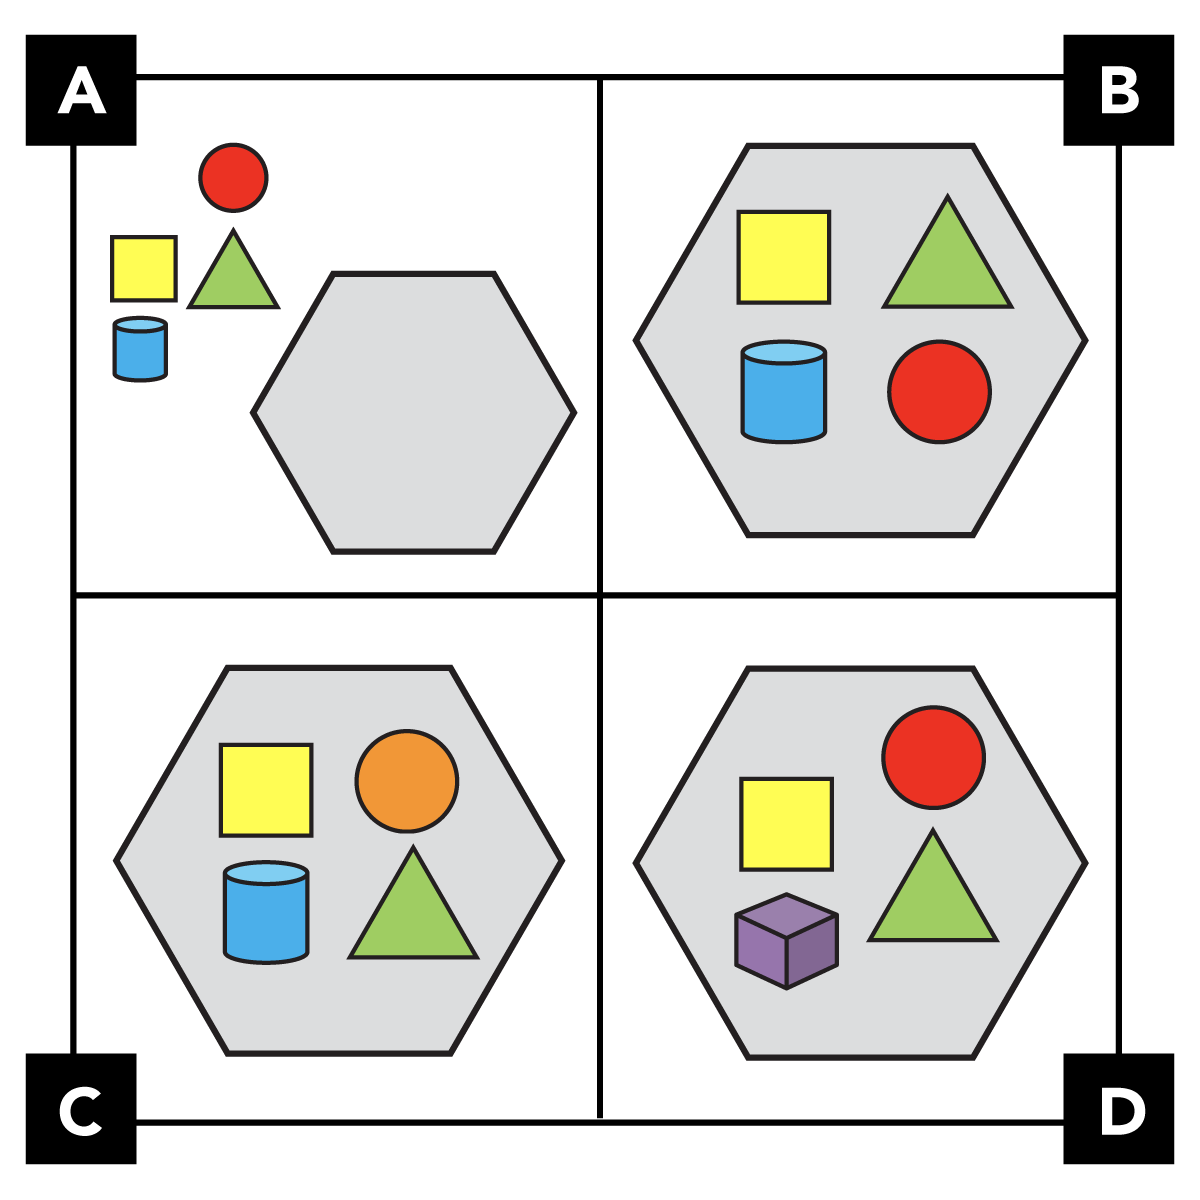 A square divided into 4 quadrants; each quadrant has a different set of geometric shapes.